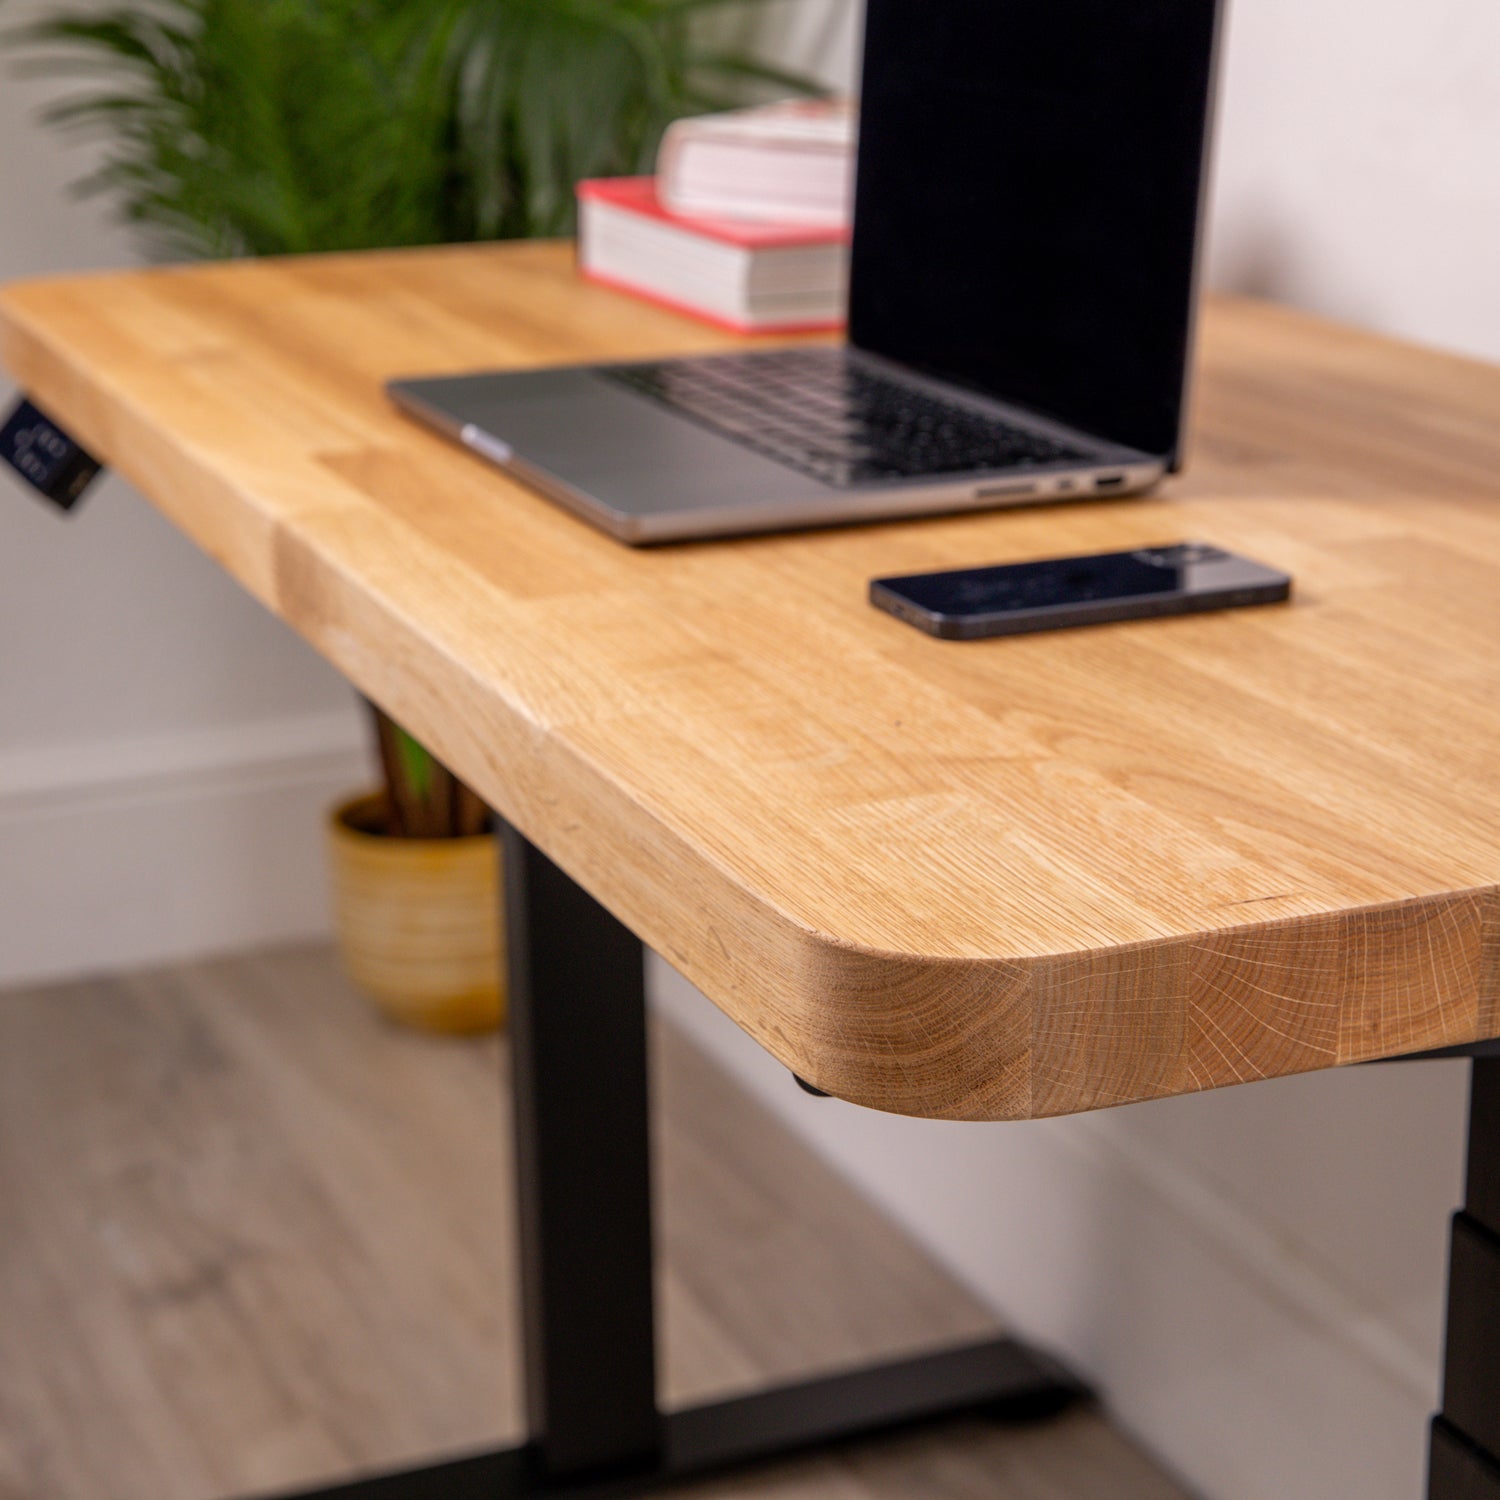 Premium Black Sit Stand Electric Desk with Prime Oak Wooden Desktop